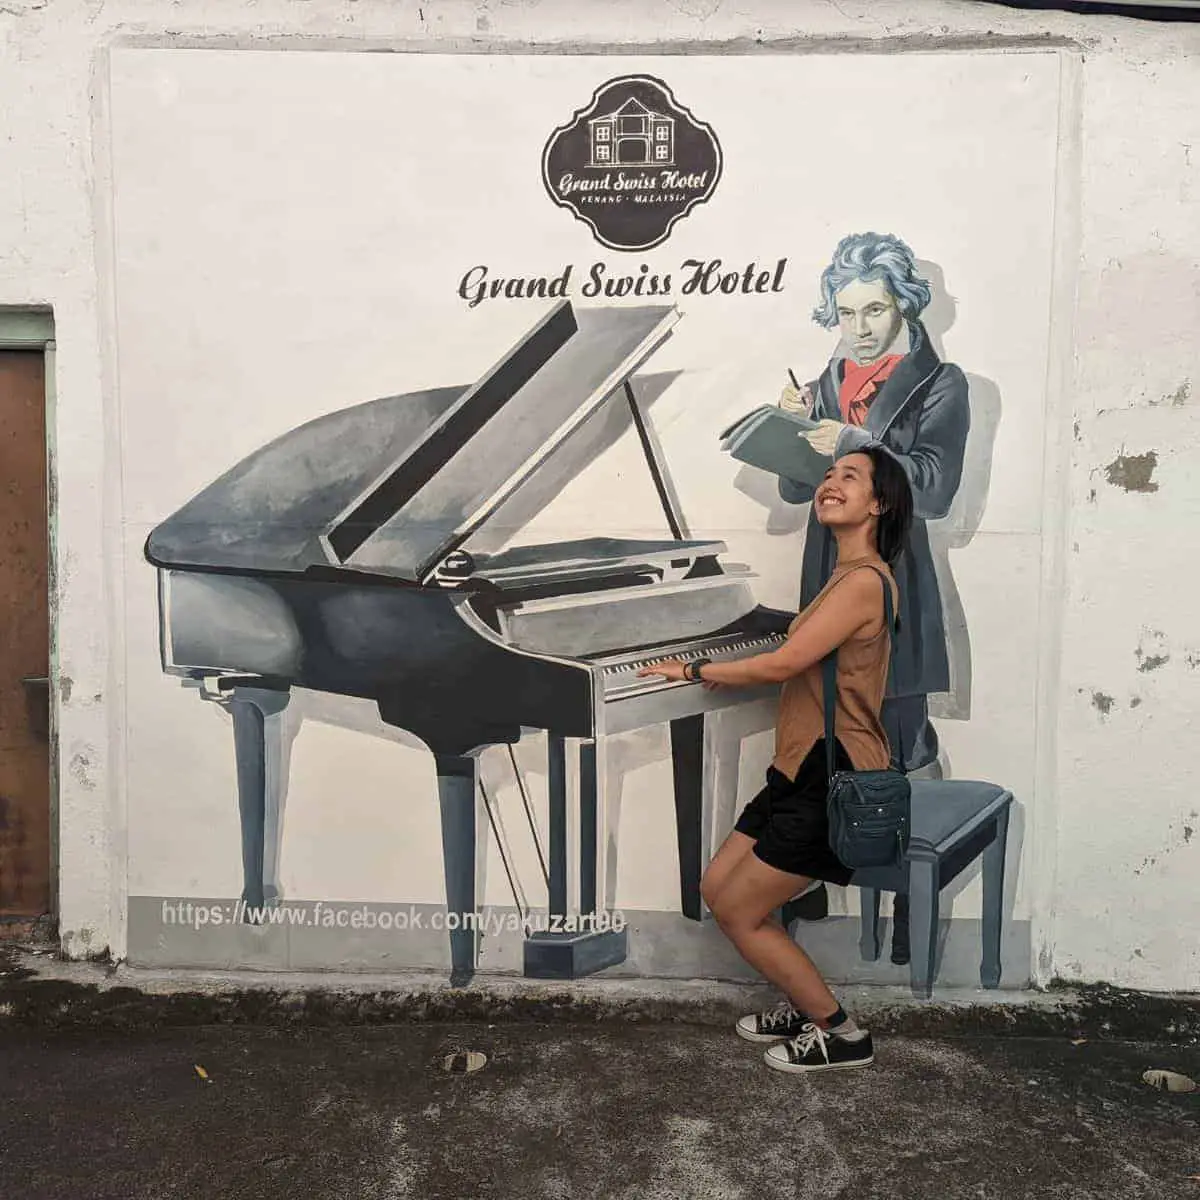 Grand swiss hotel Beethoven mural